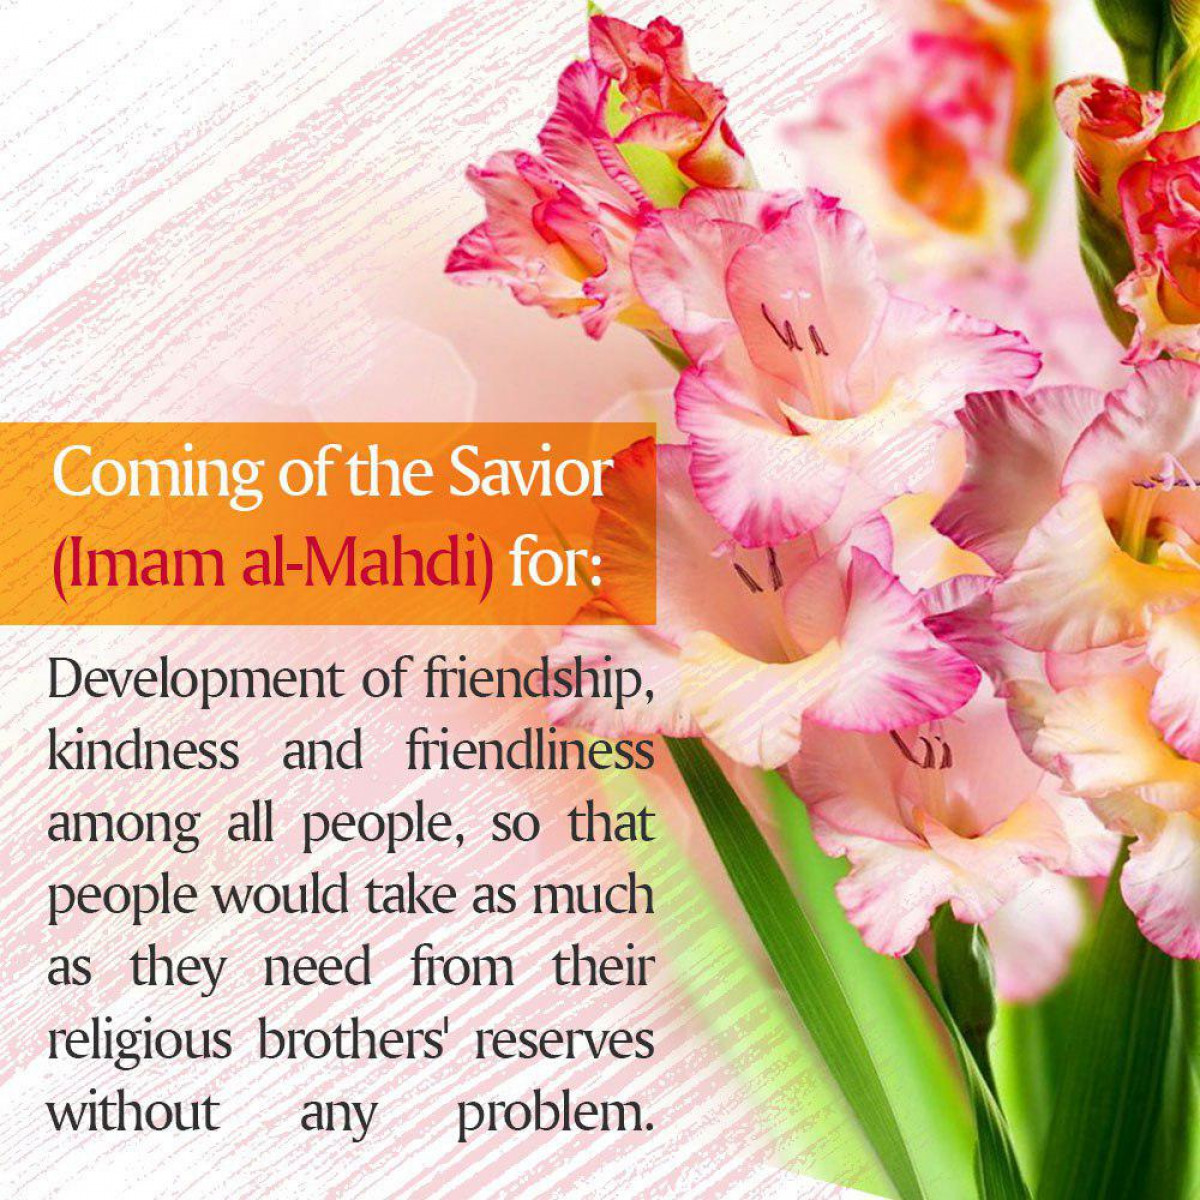 Coming of the Savior (Imam al-Mahdi) for 6